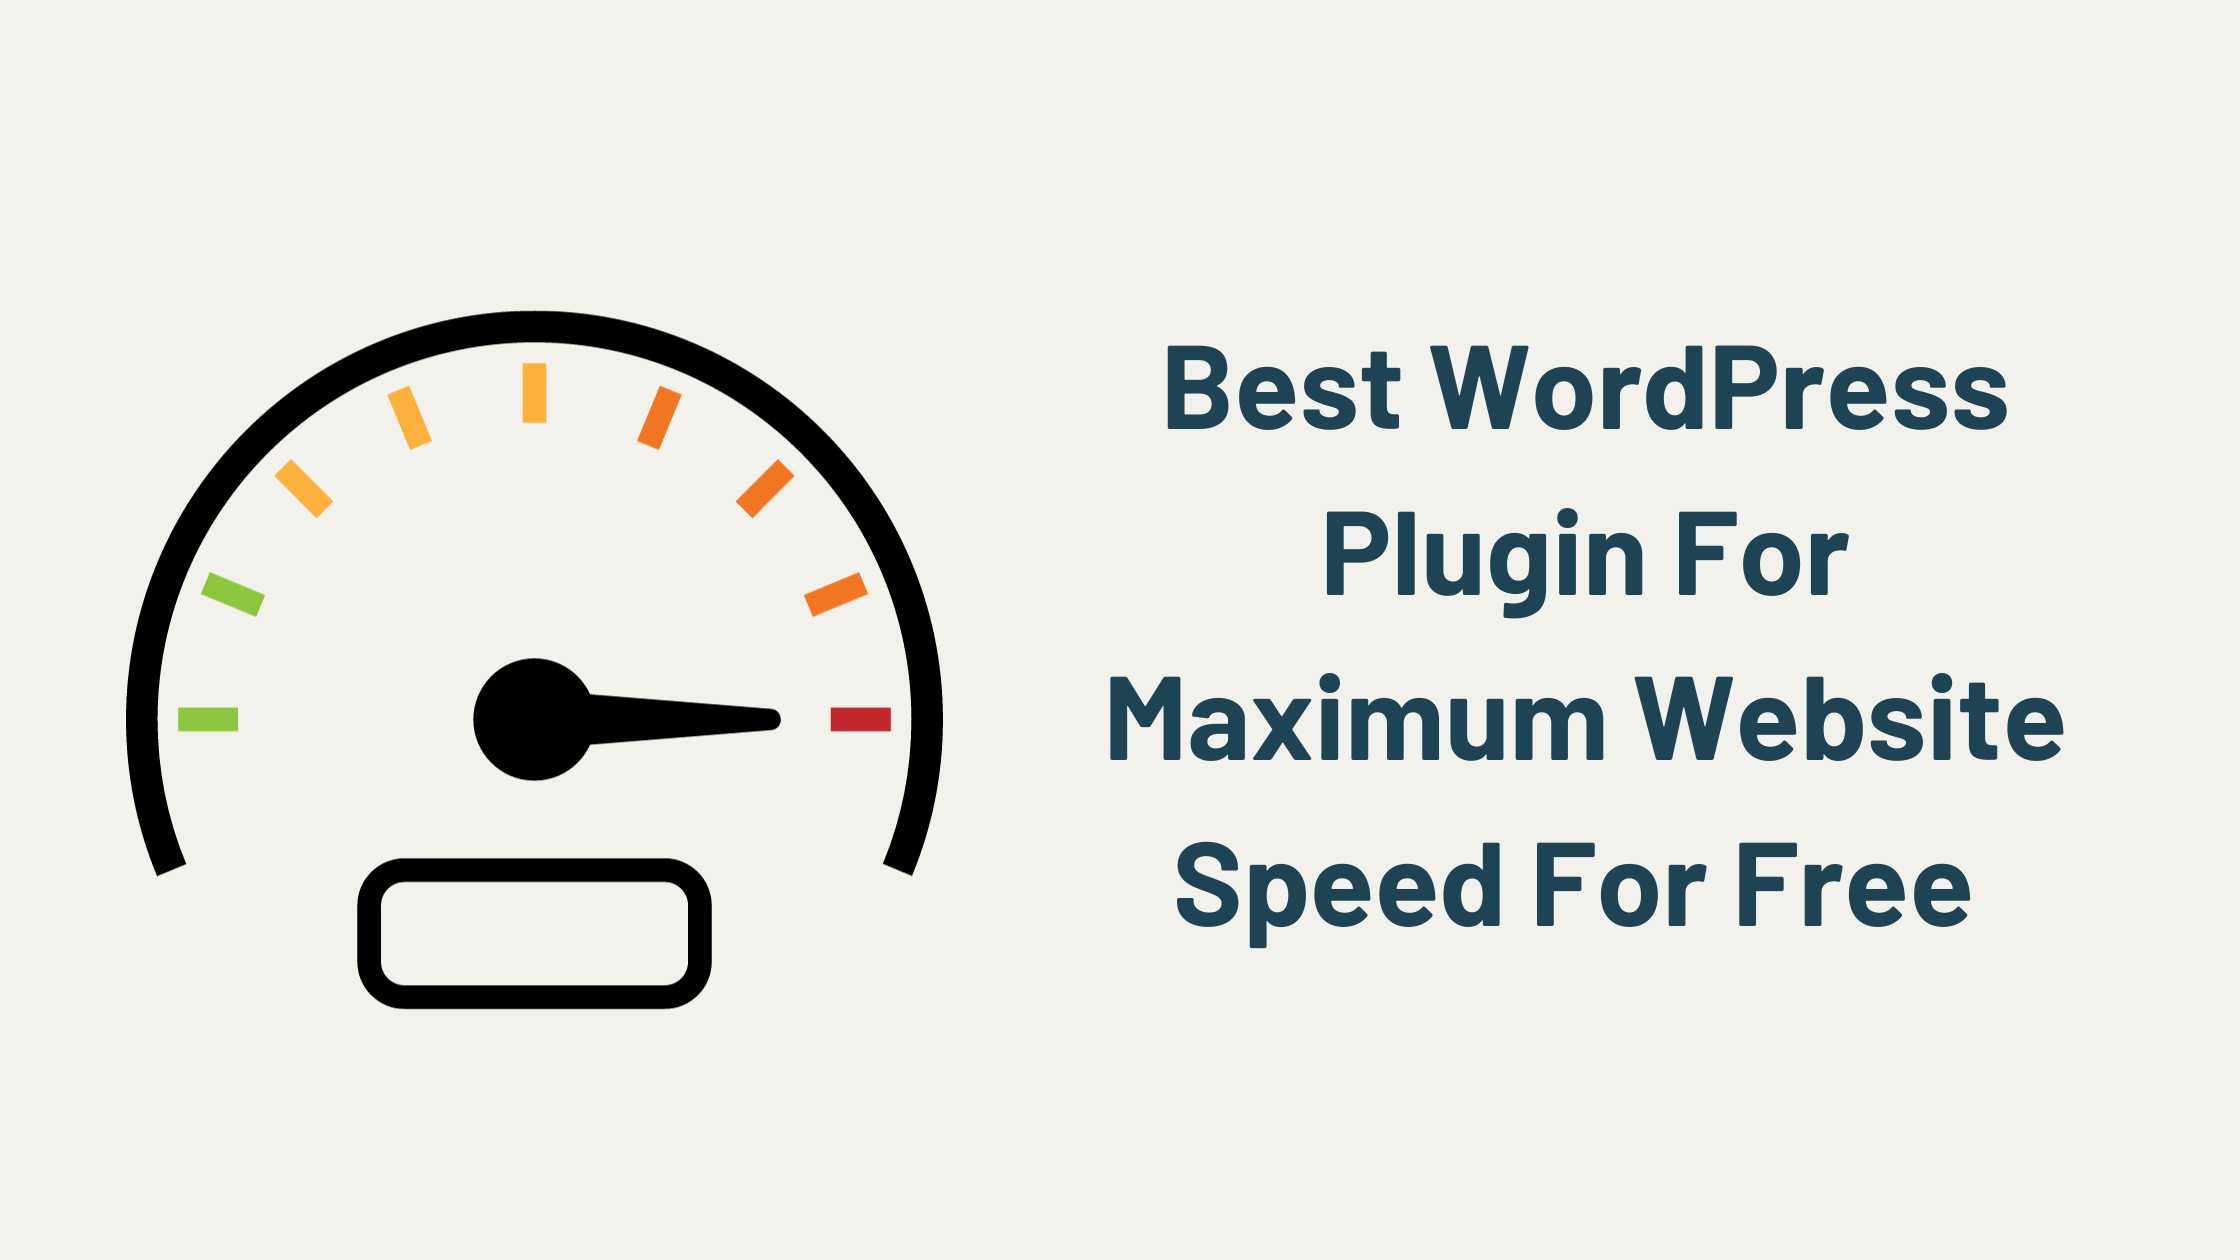 Best WordPress Plugin For Maximum Website Speed For Free